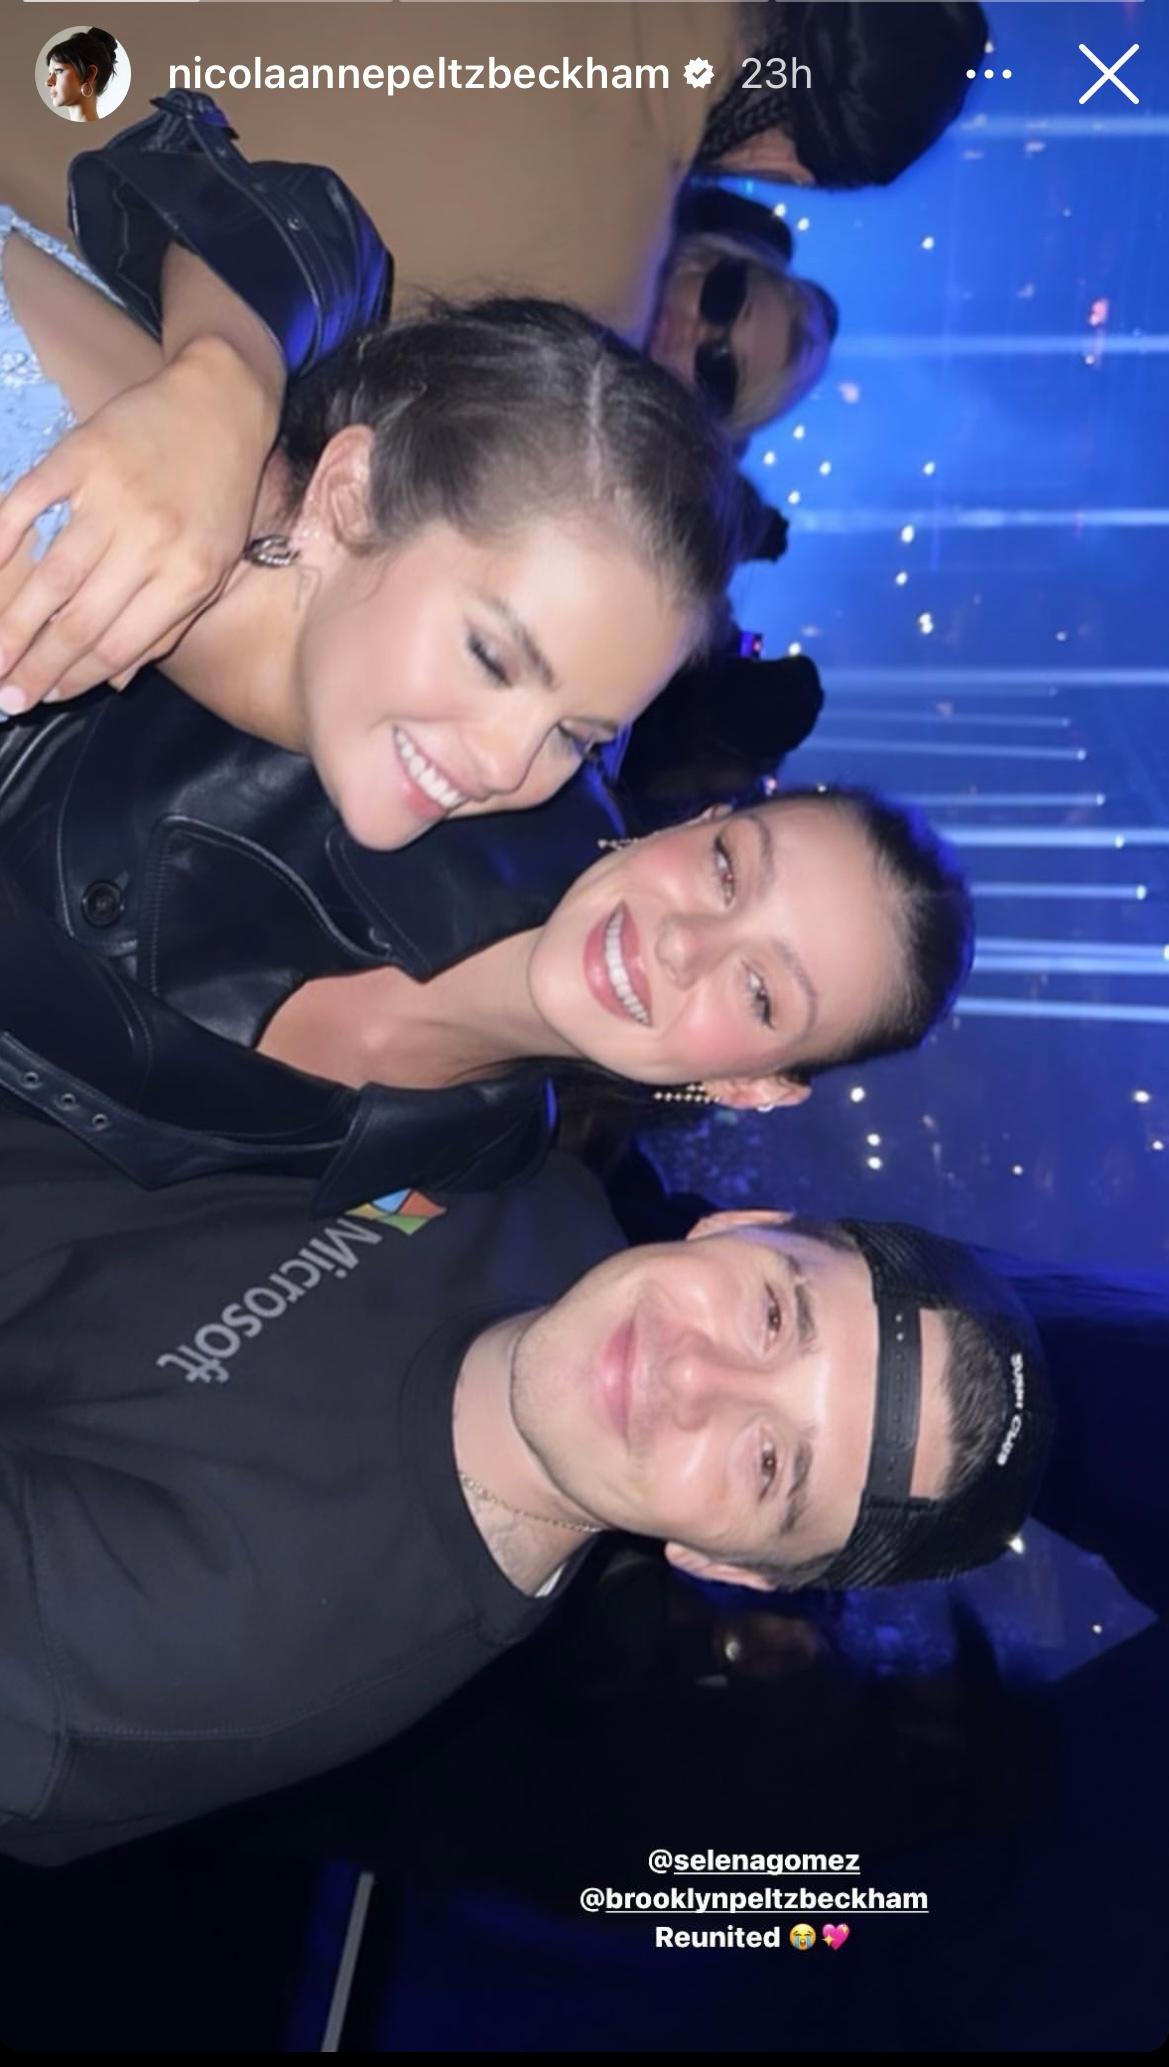 Nicola Peltz, Brooklyn Beckham and Selena Gomez reunite